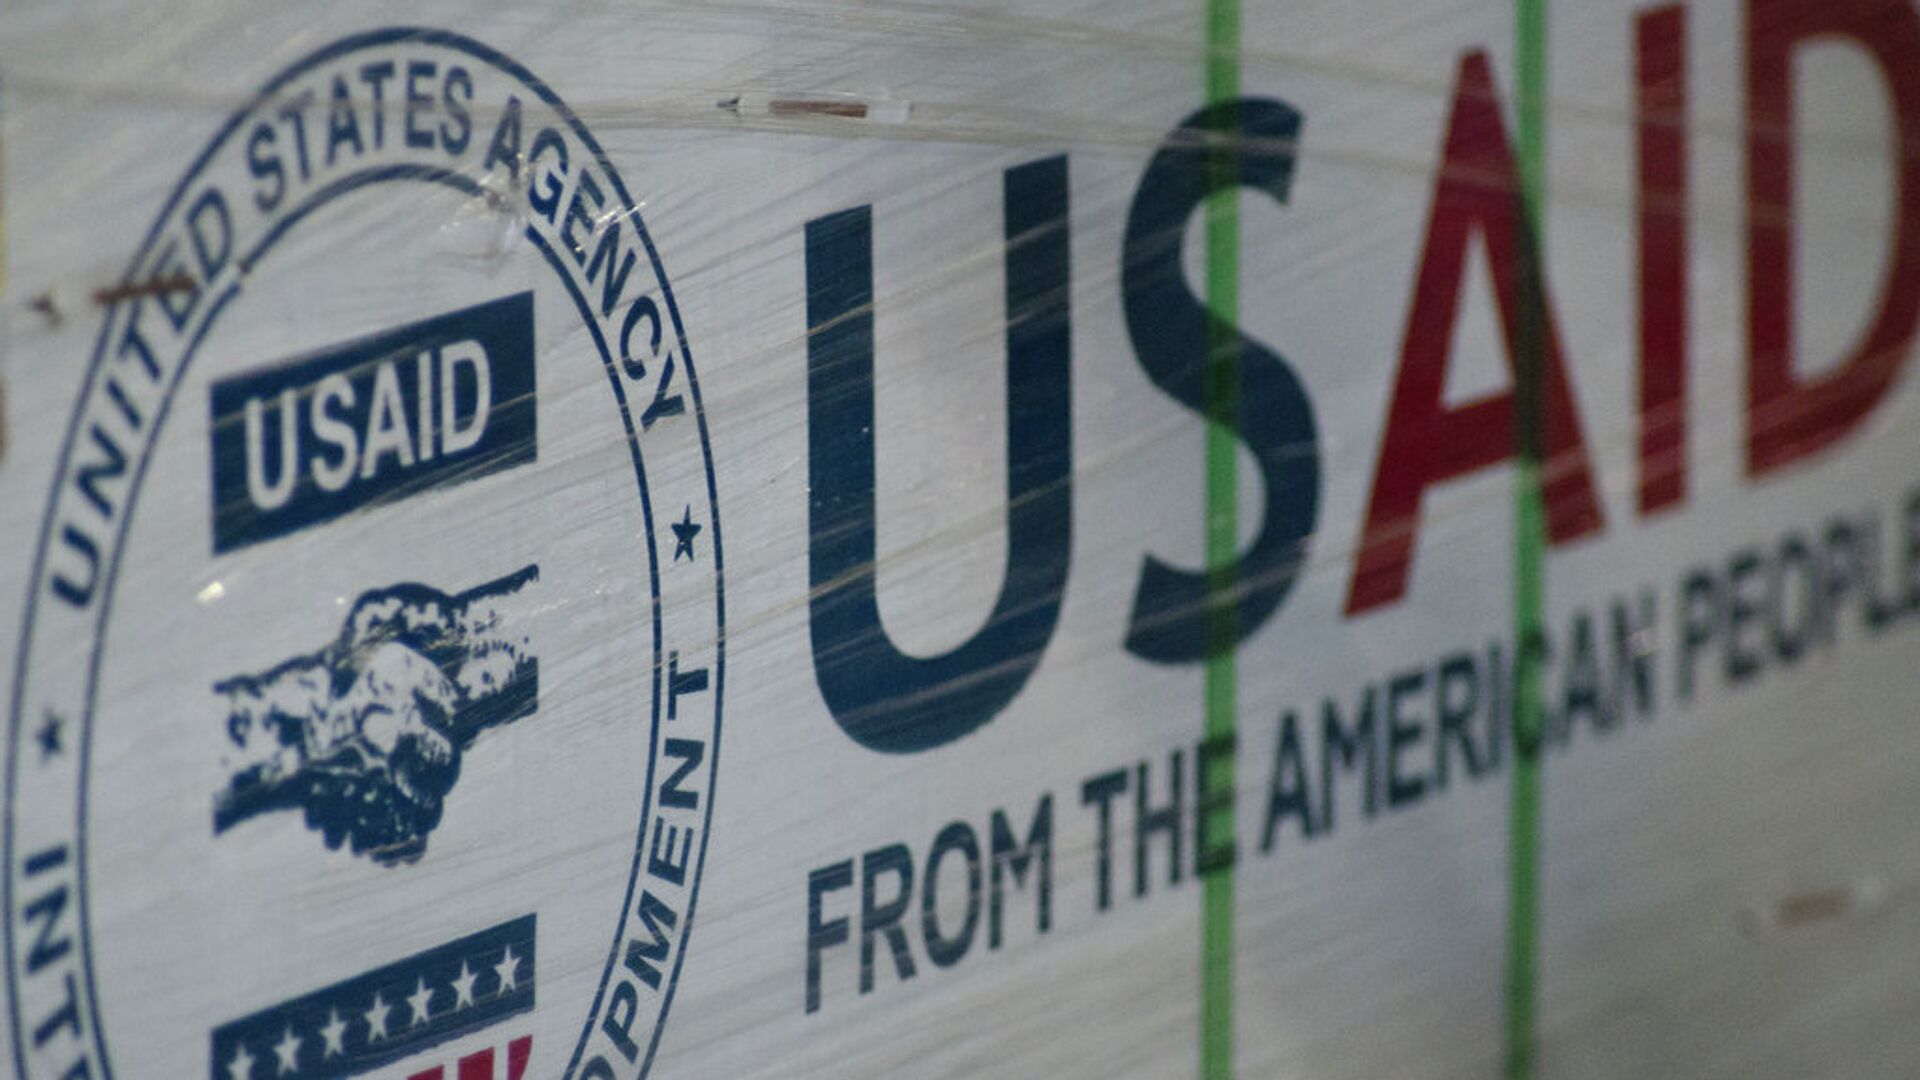 Помощь от агентства США по международному развитию (USAID) - РИА Новости, 1920, 19.09.2012